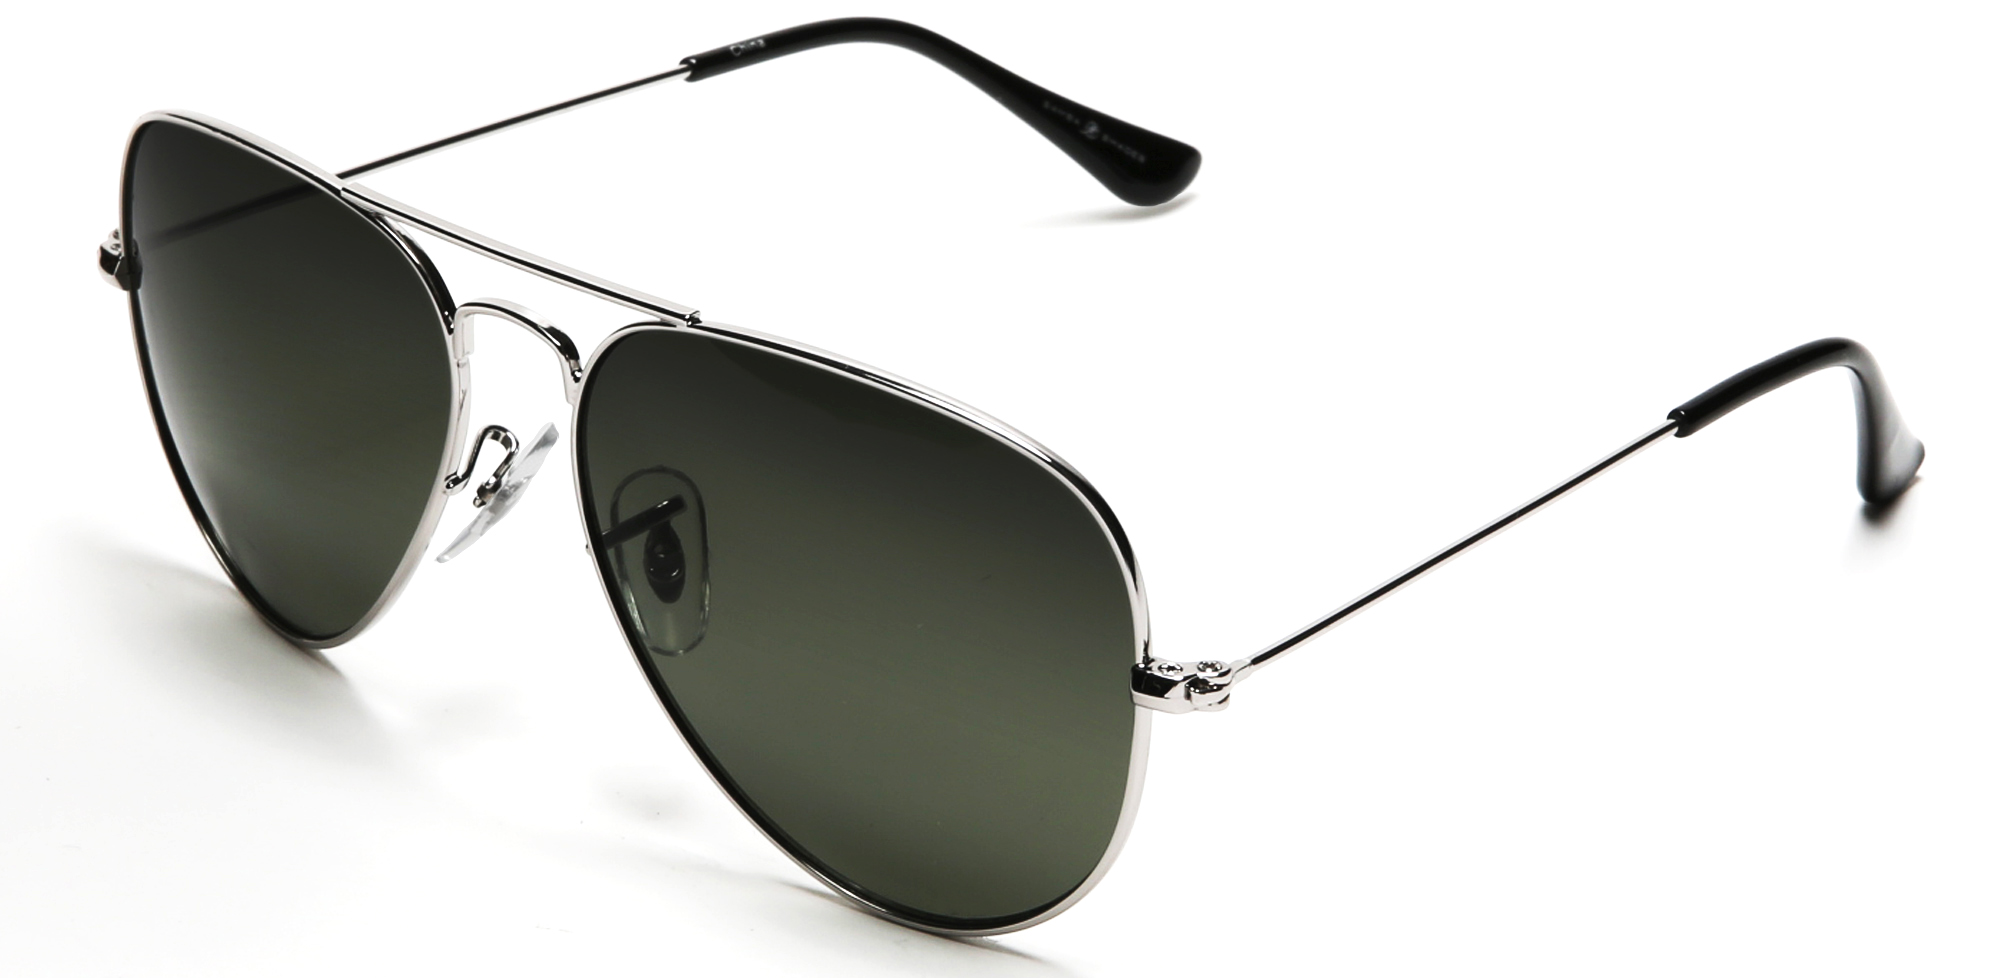 Samba Shades Unisex Classic Aviator Sunglasses Silver Frame Green Lens - Glen & Ivy Sky Inspired - image 2 of 4